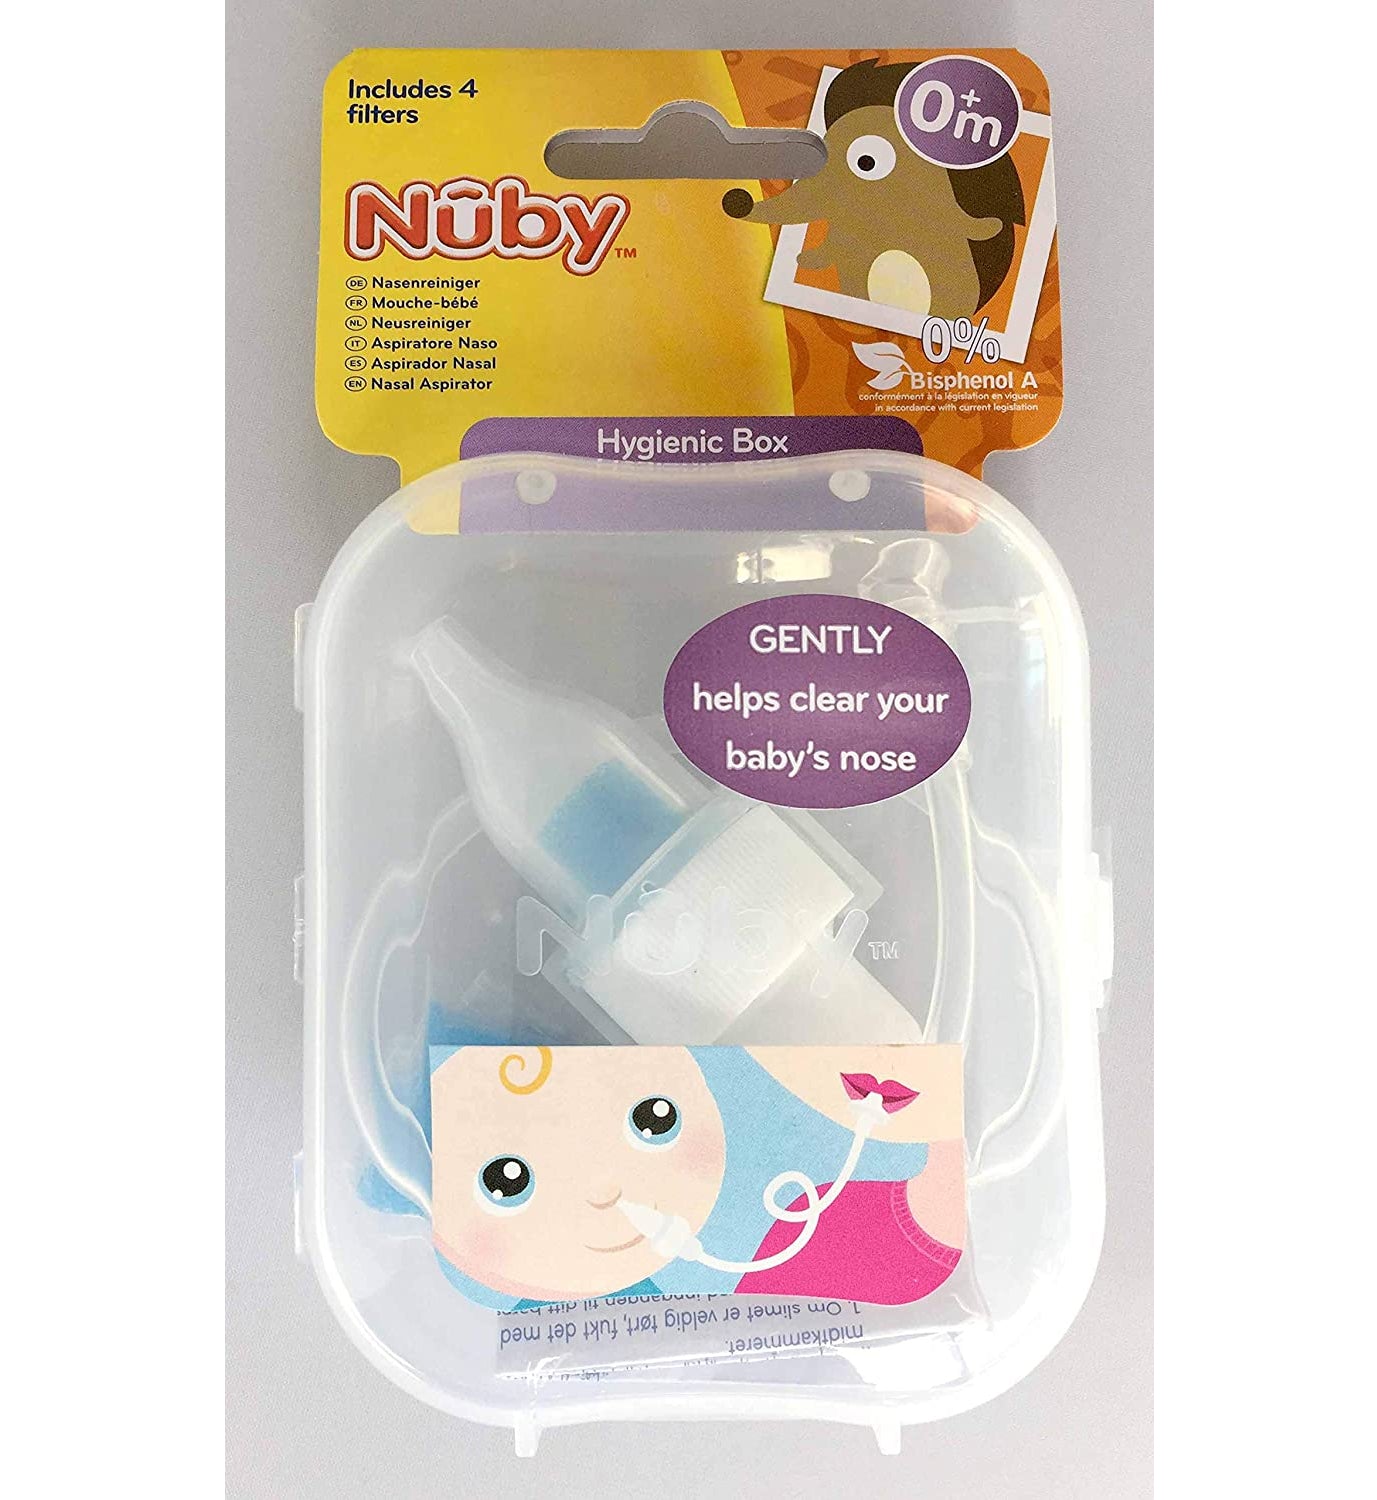 Nuby Breathe-eez Infant Nasal Aspirator with Travel Case